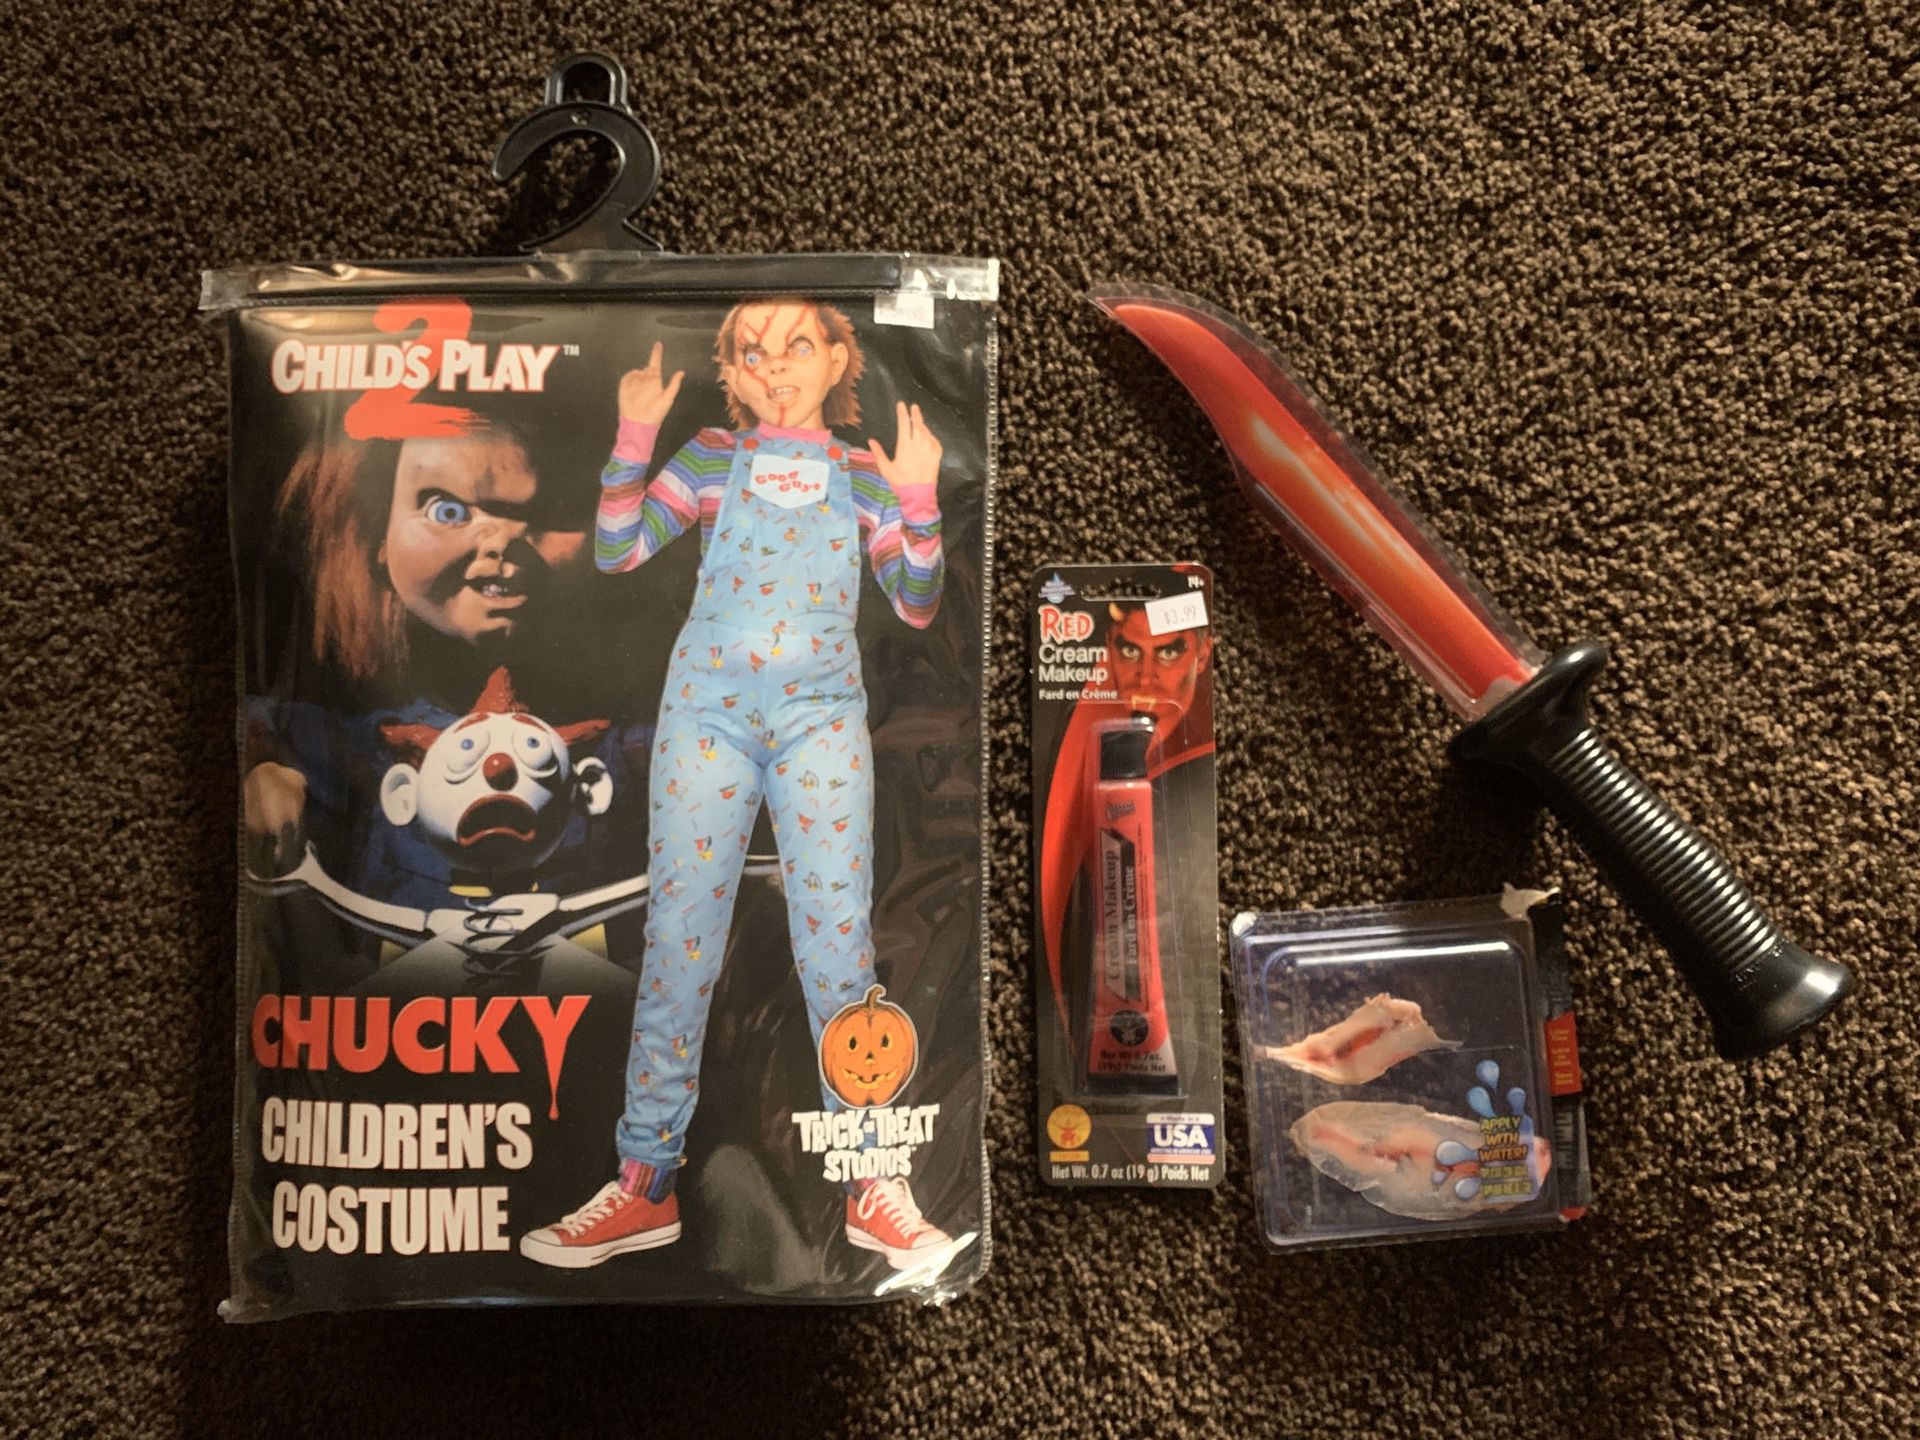 Chucky Children’s Costume